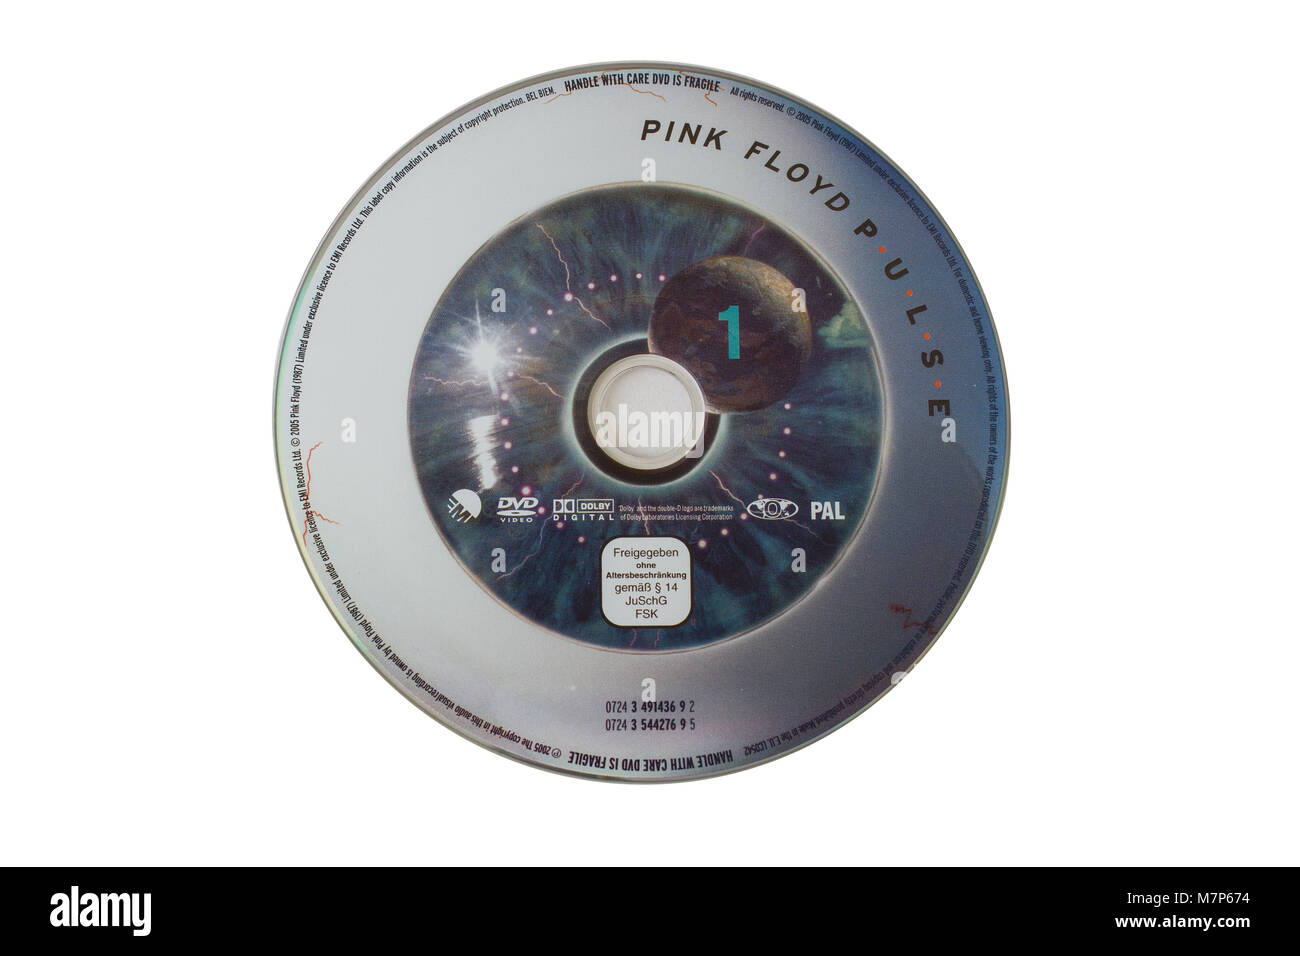 Pink Floyd PULSE original DVD Stock Photo